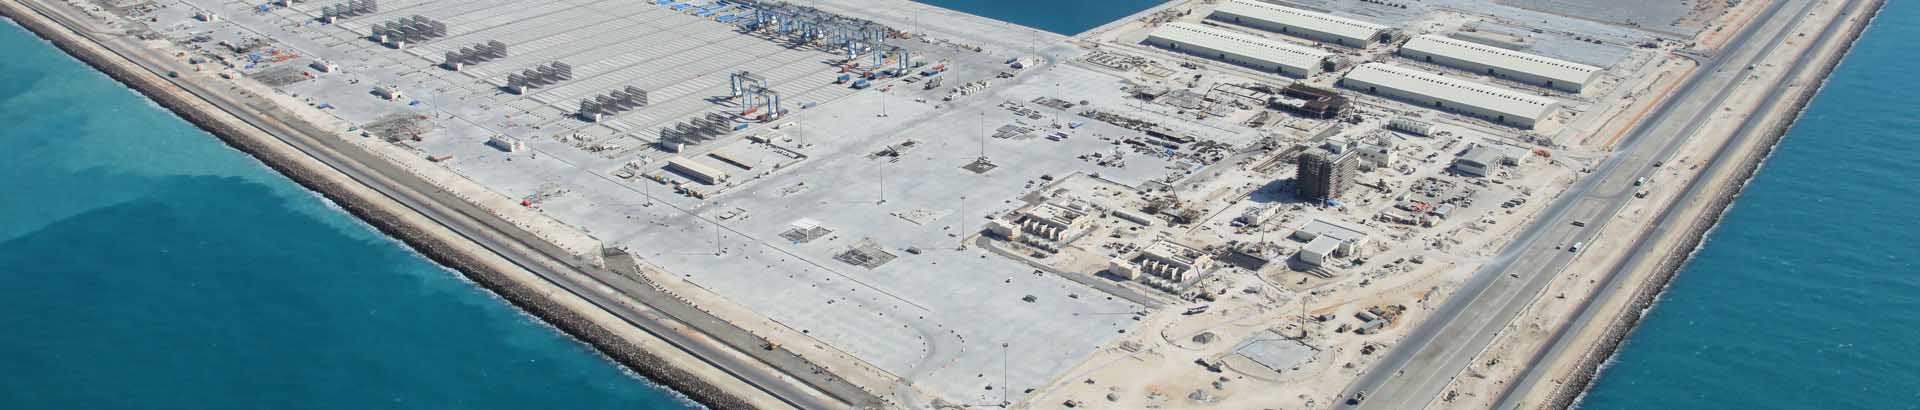 Aerial view of Khalifa Port